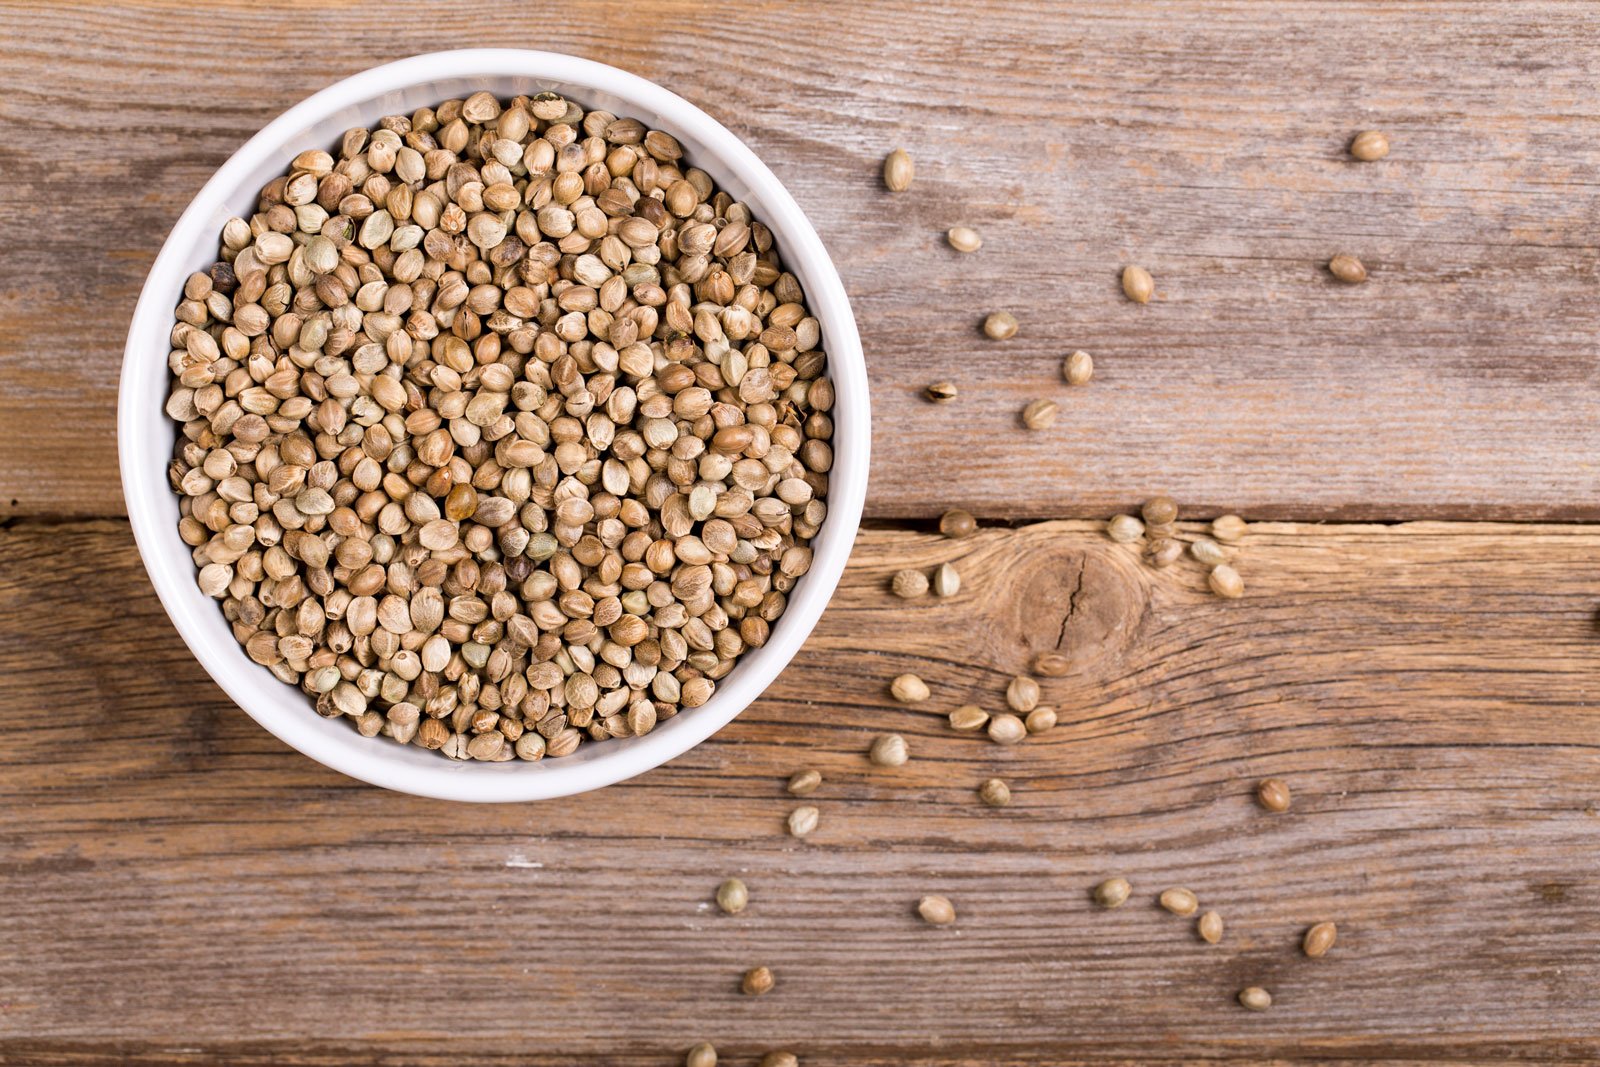 Foods we love: Hemp seeds - Levels